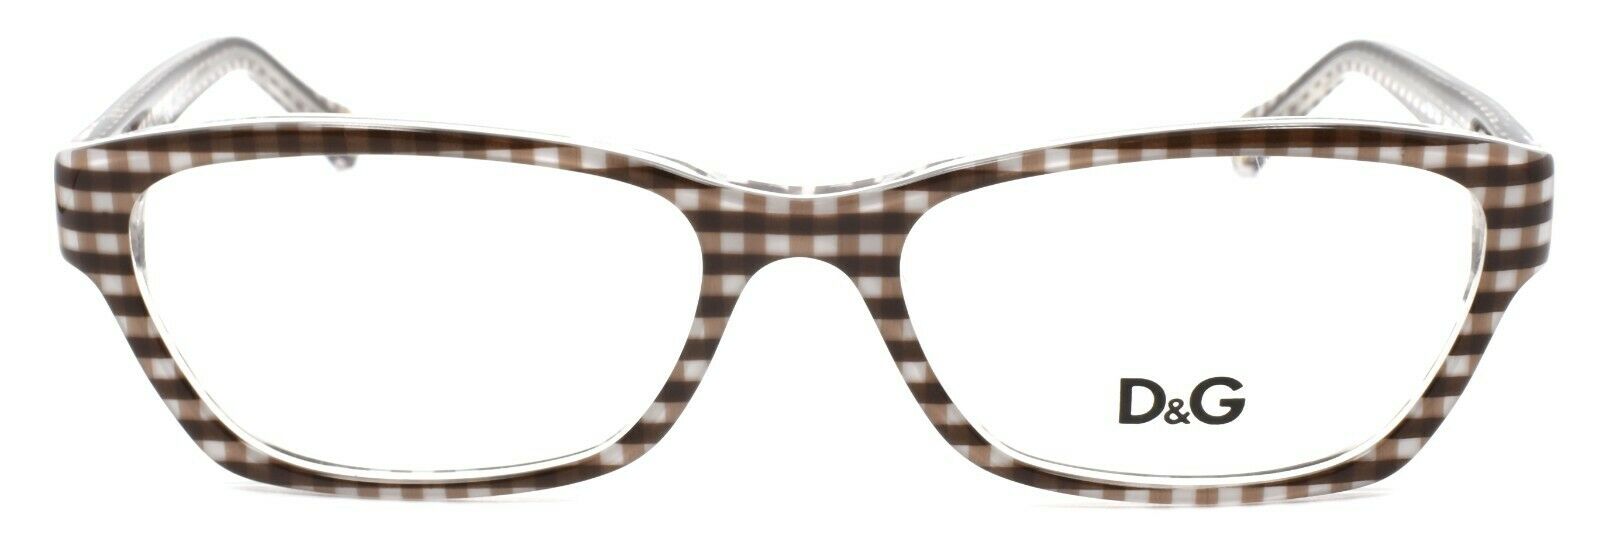 2-Dolce & Gabbana D&G 1216 1882 Eyeglasses Frames 52-16-135 Brown Checkered Picnic-679420421414-IKSpecs